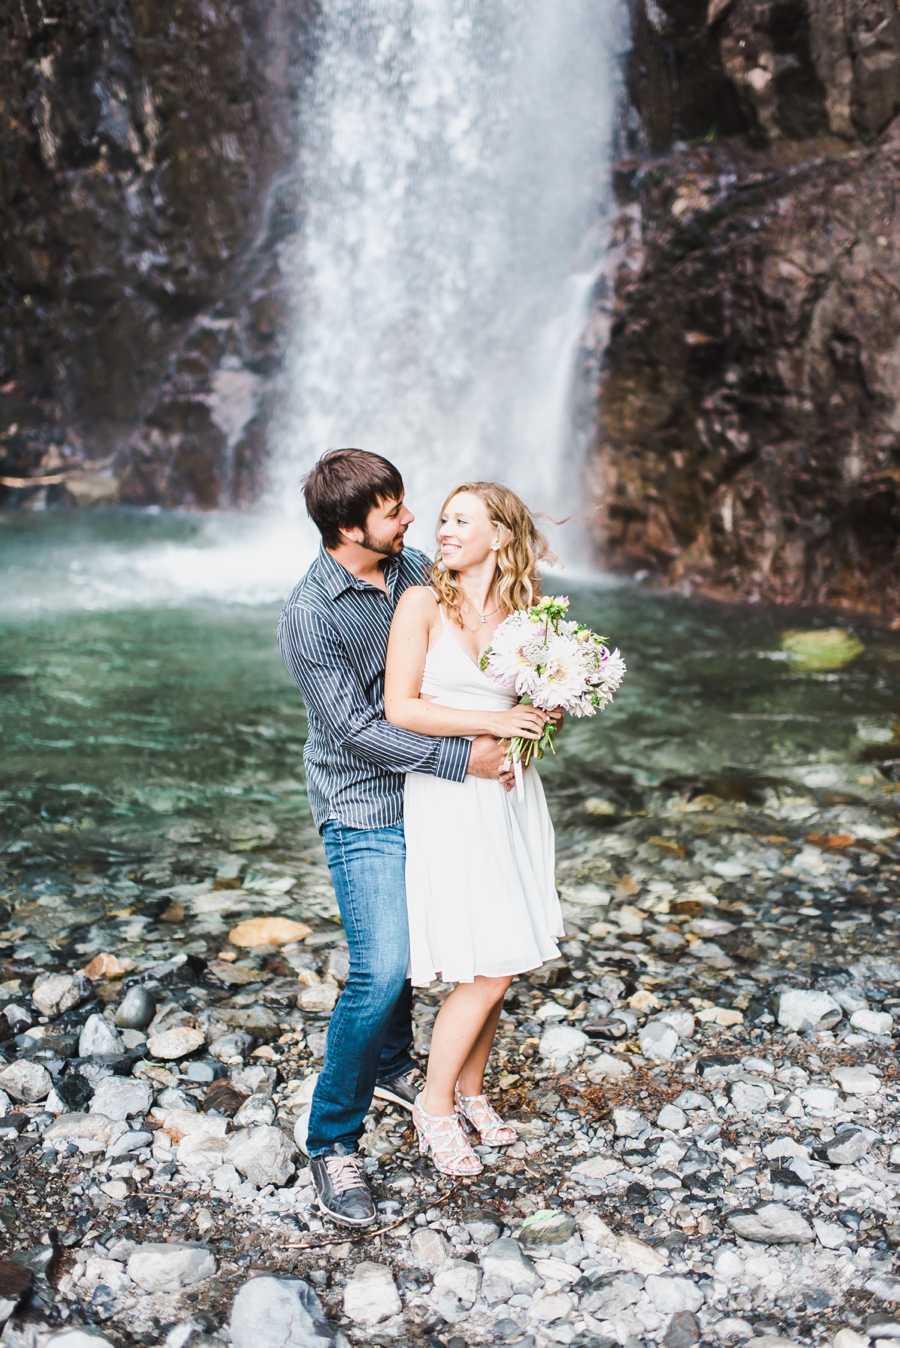 Pacific Northwest Waterfall Engagement Photographer